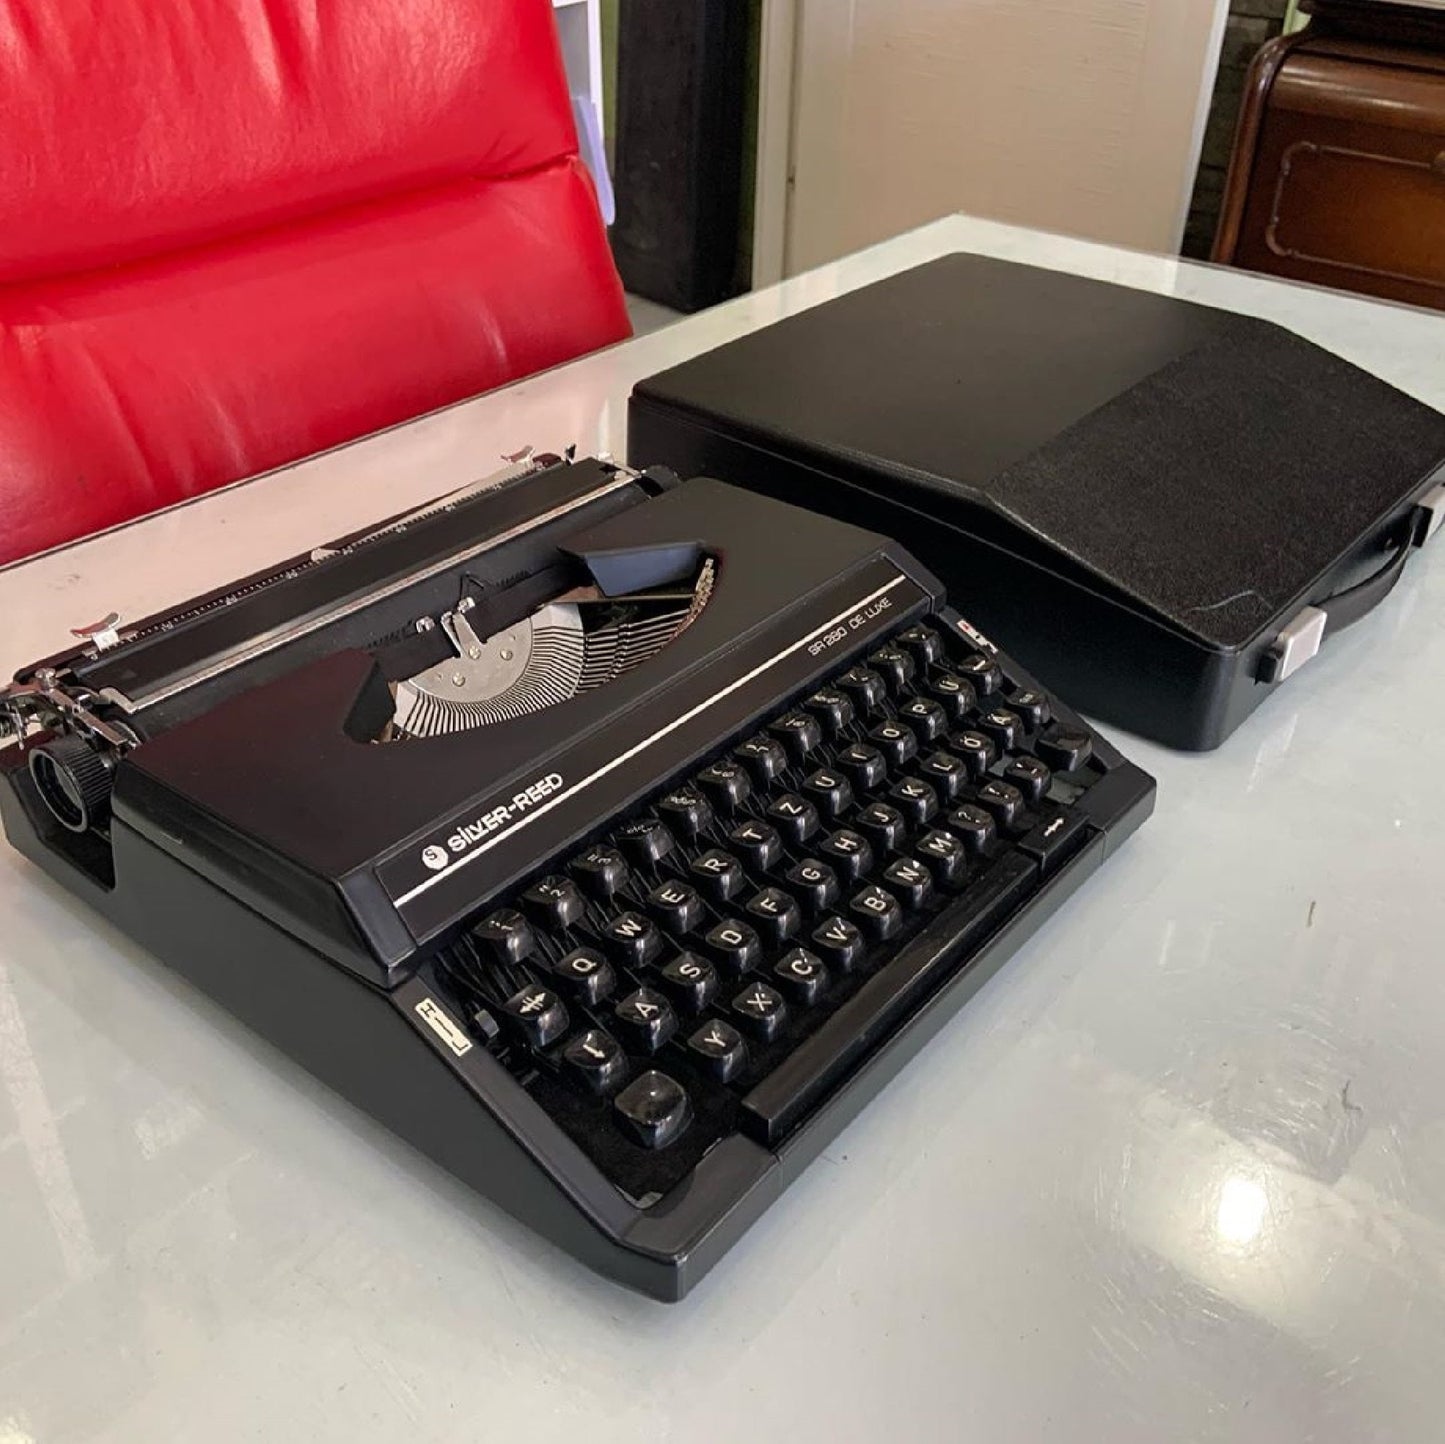 Silver Reed SR 280 Deluxe Typewriter - Functional Elegance